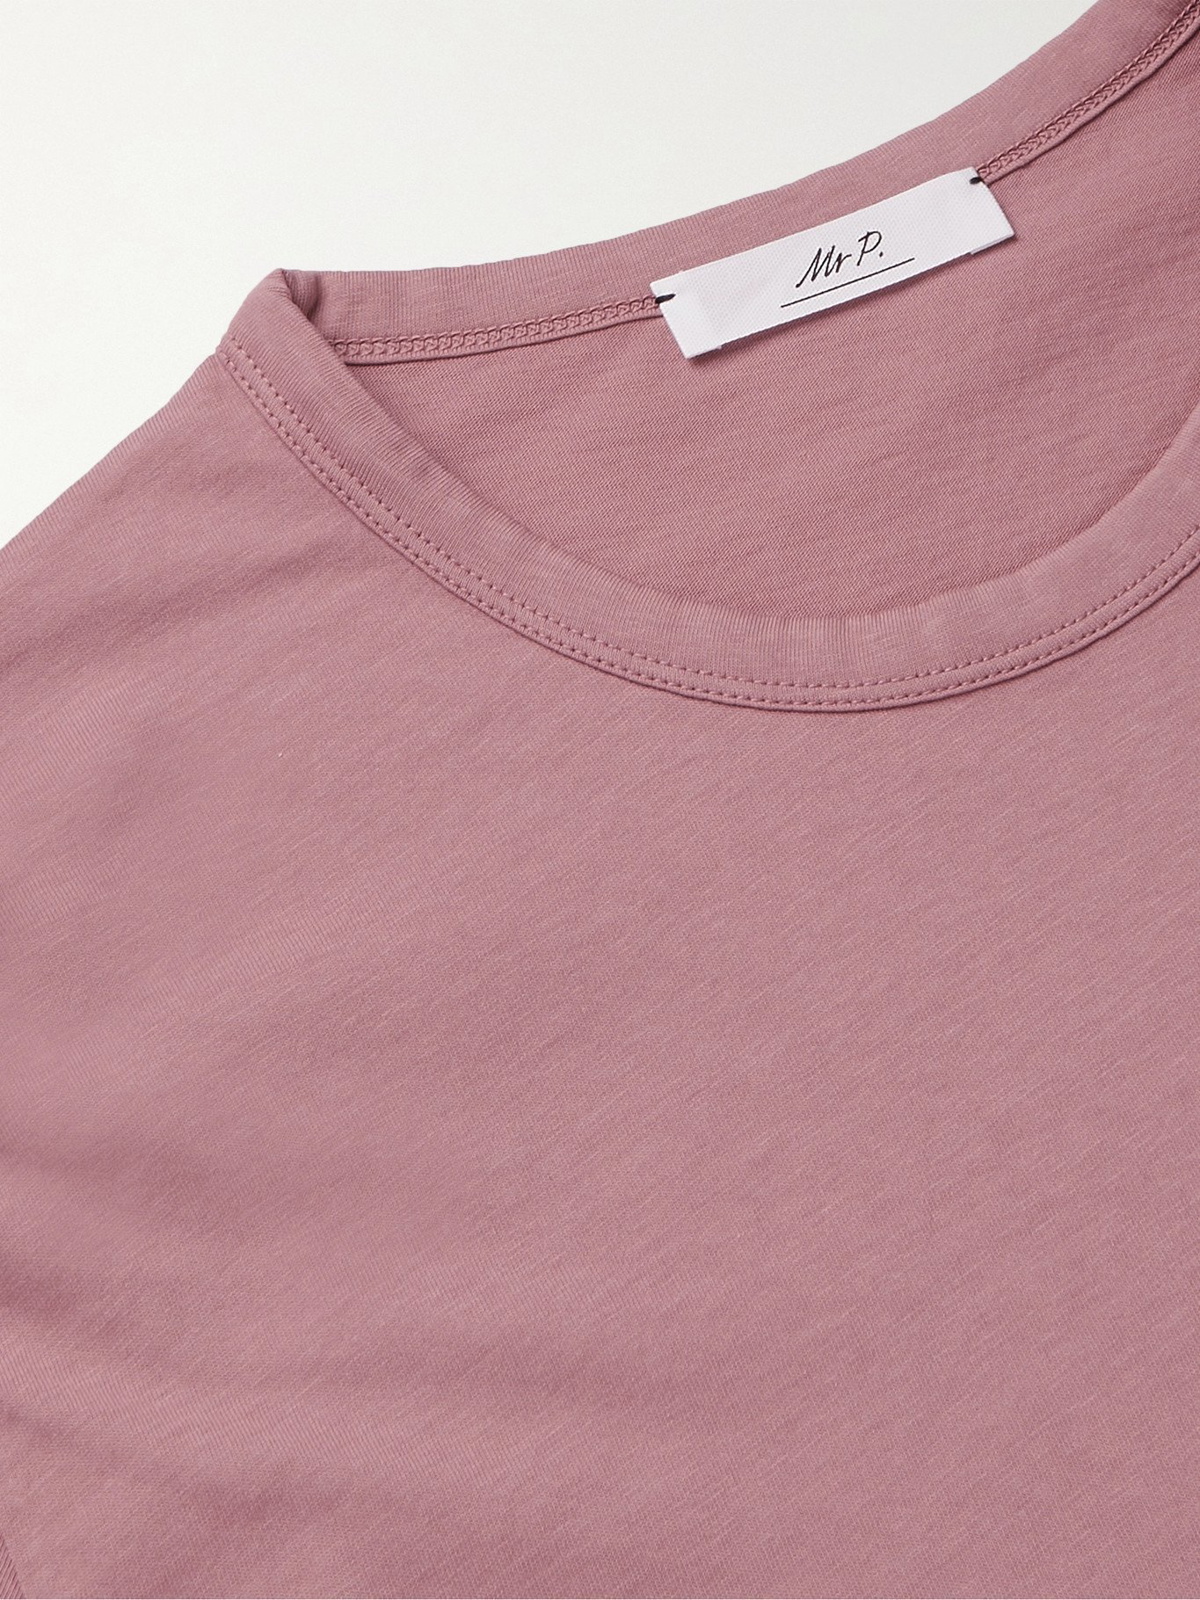 MR P. - Garment-Dyed Cotton-Jersey T-Shirt - Pink Mr P.